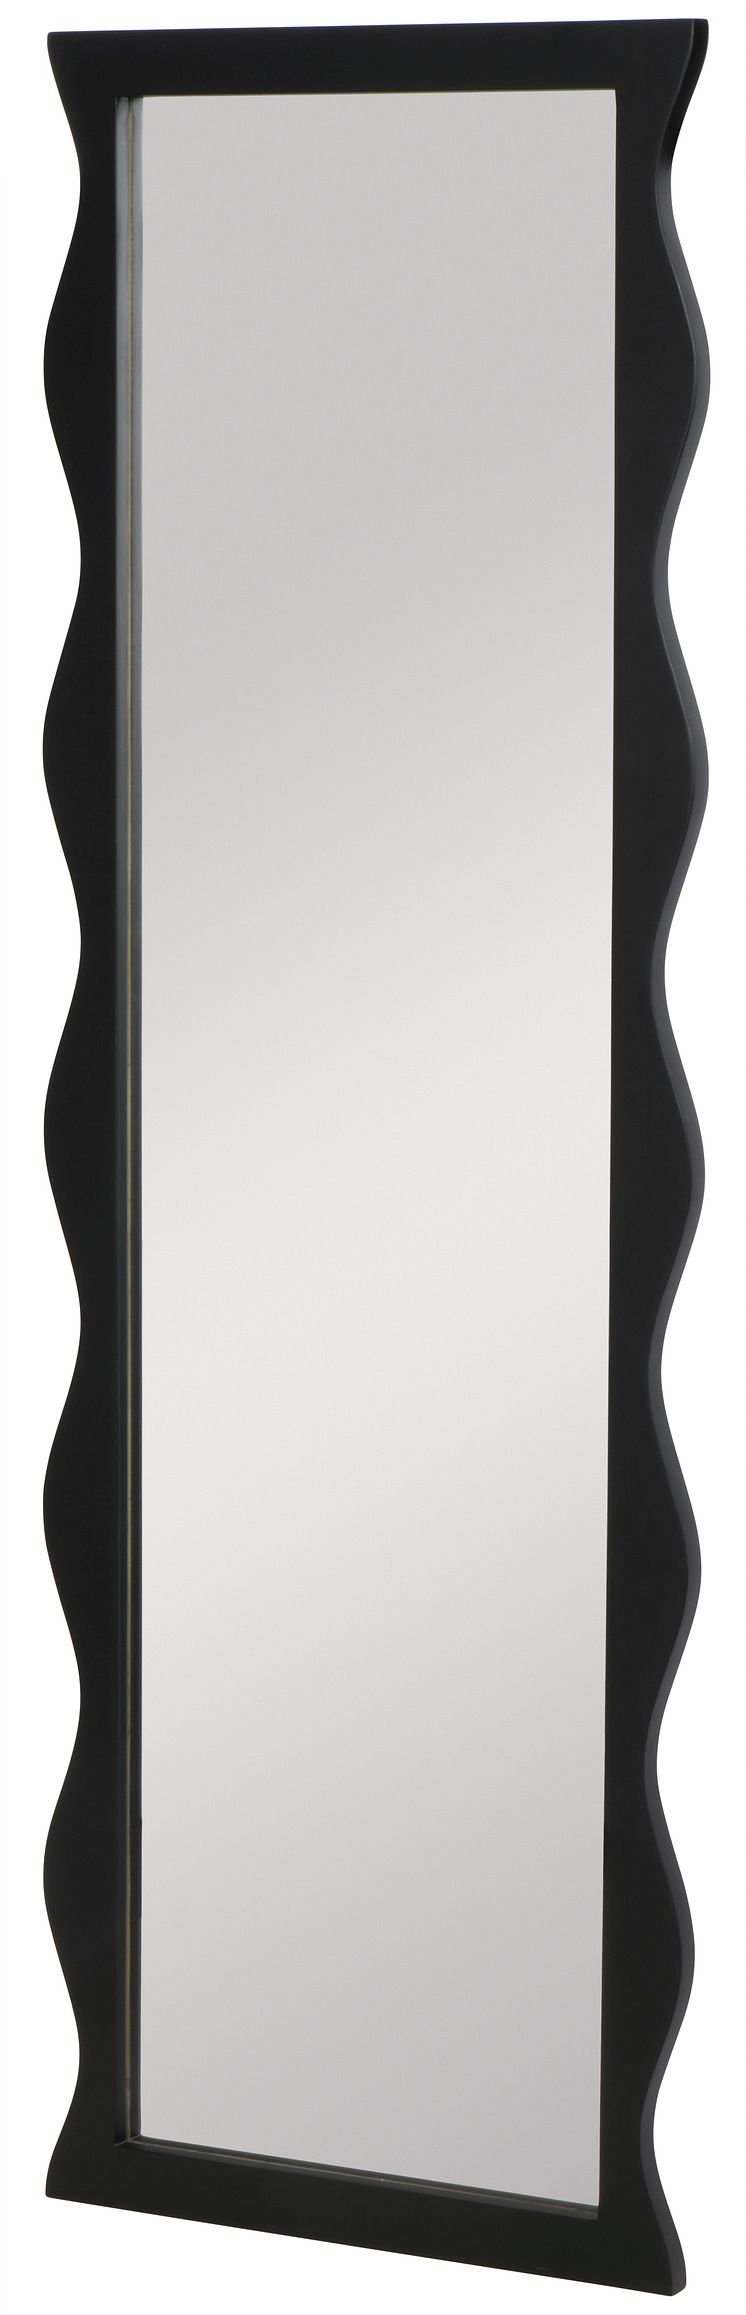 NYHET! Mirror Ture 50x150 cm Black FSC Wood 59,90  EUR.jpg